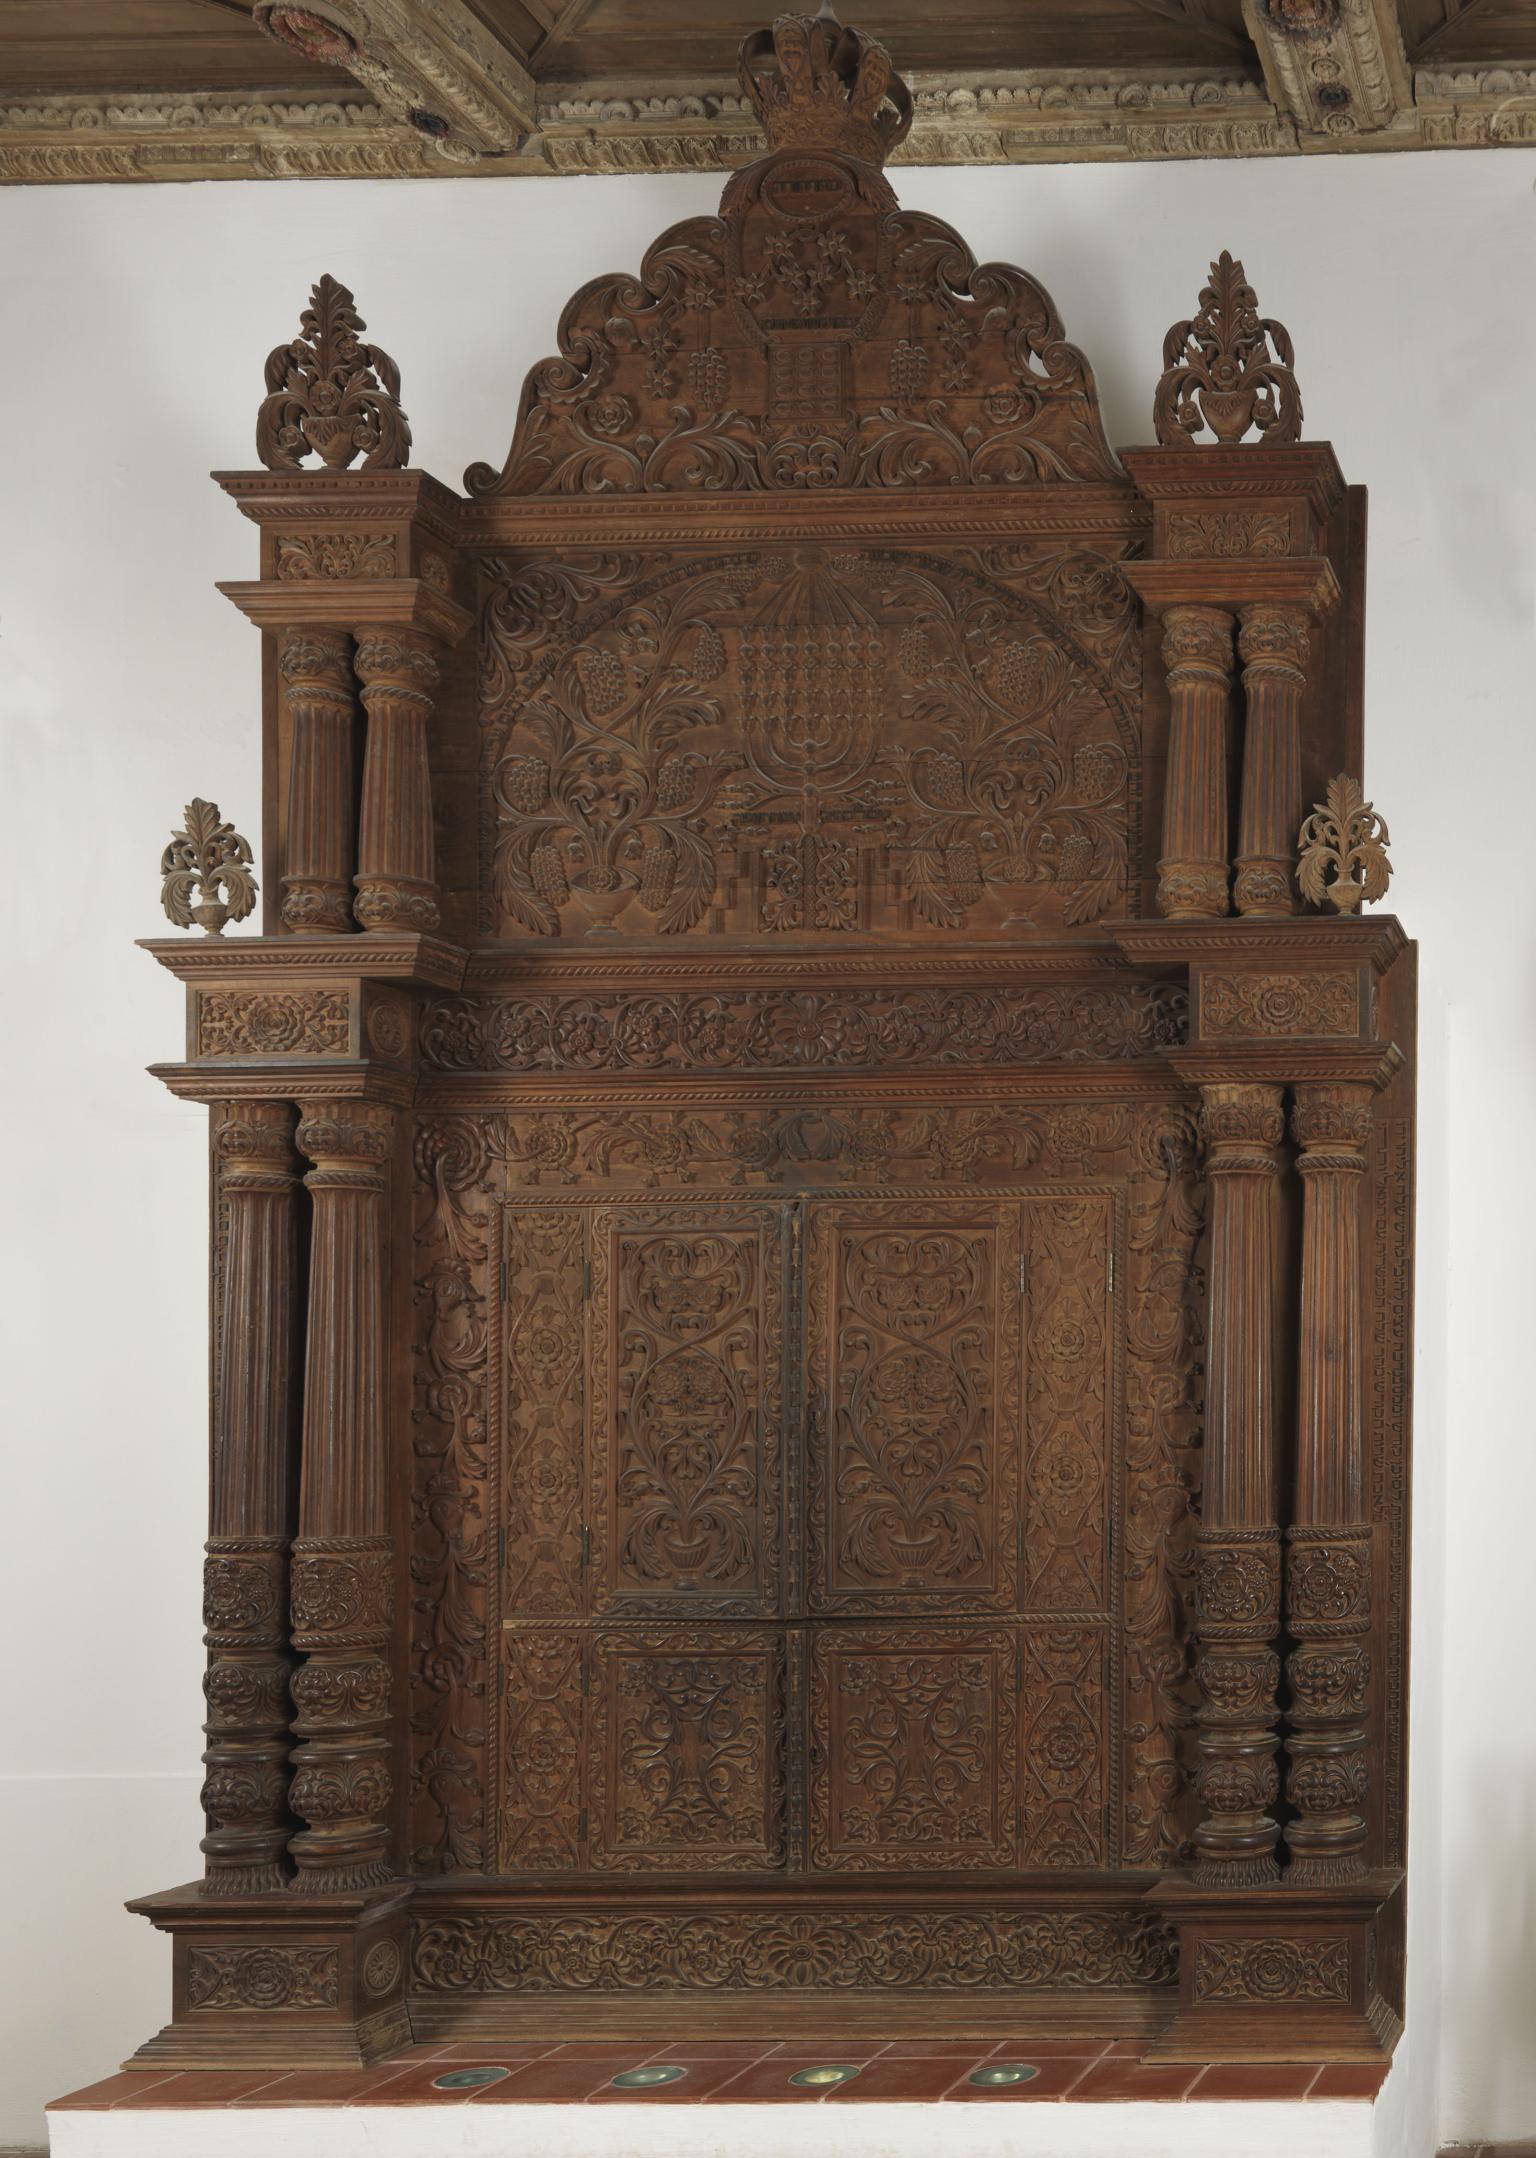 Close-up photograph of carved wood Torah ark.